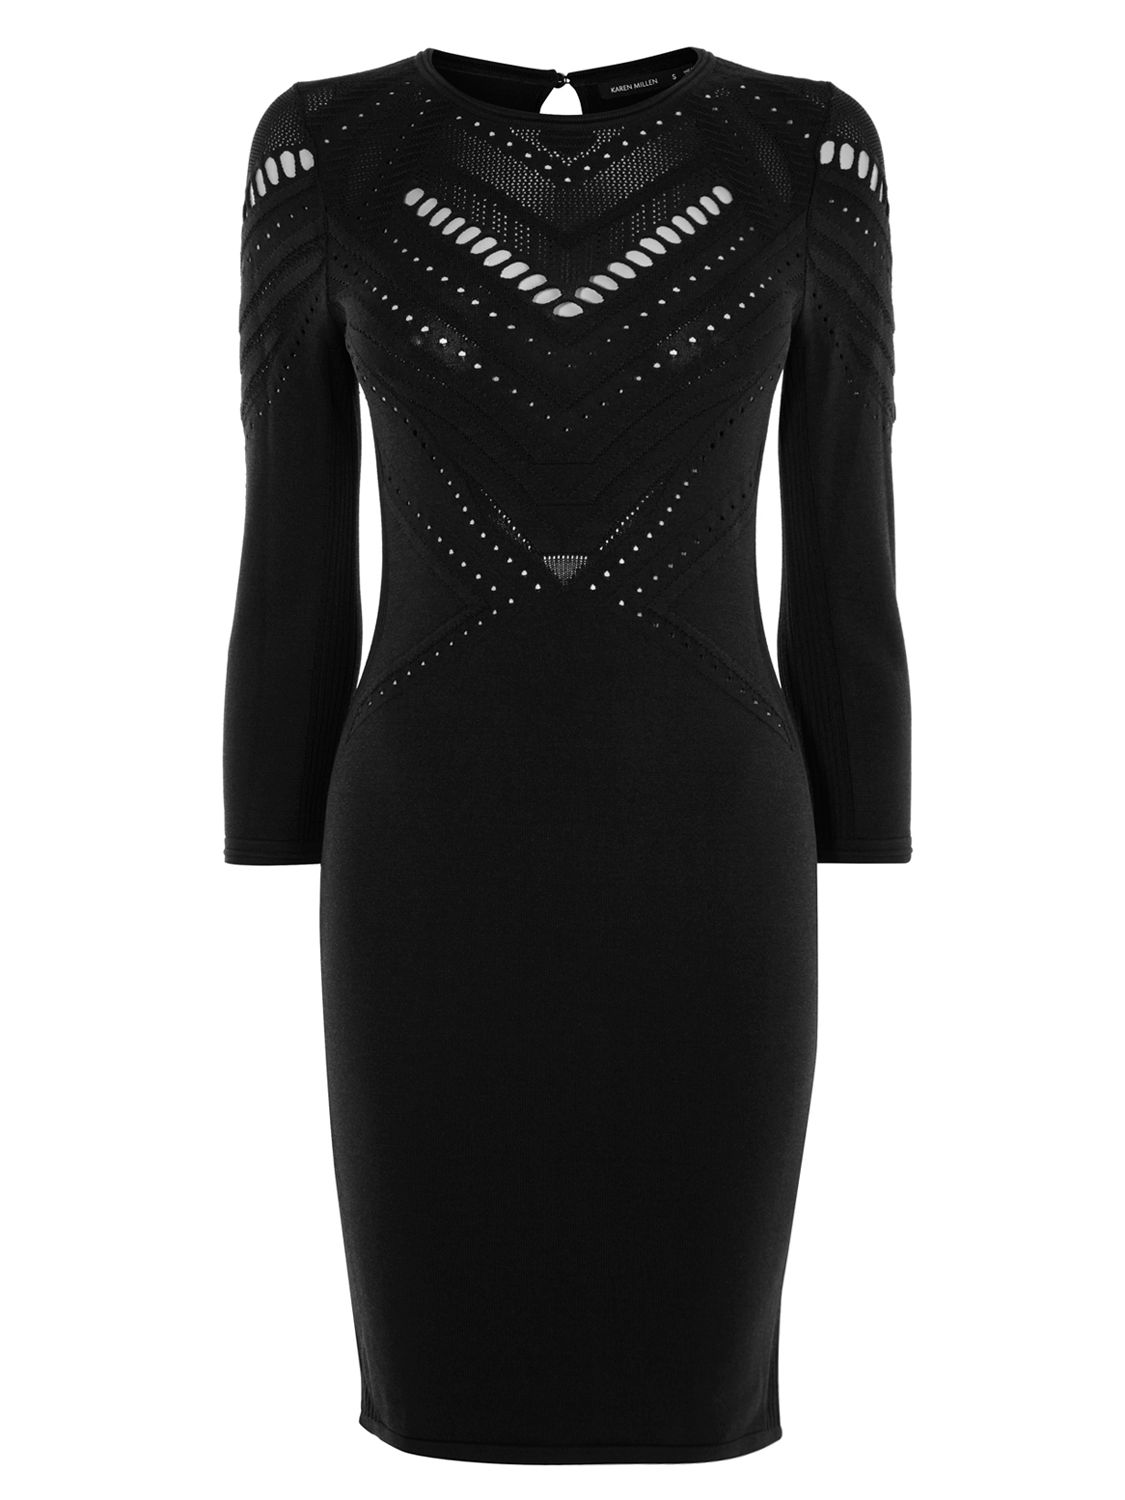 Karen Millen Open Knit Bodycon Dress, Black at John Lewis & Partners